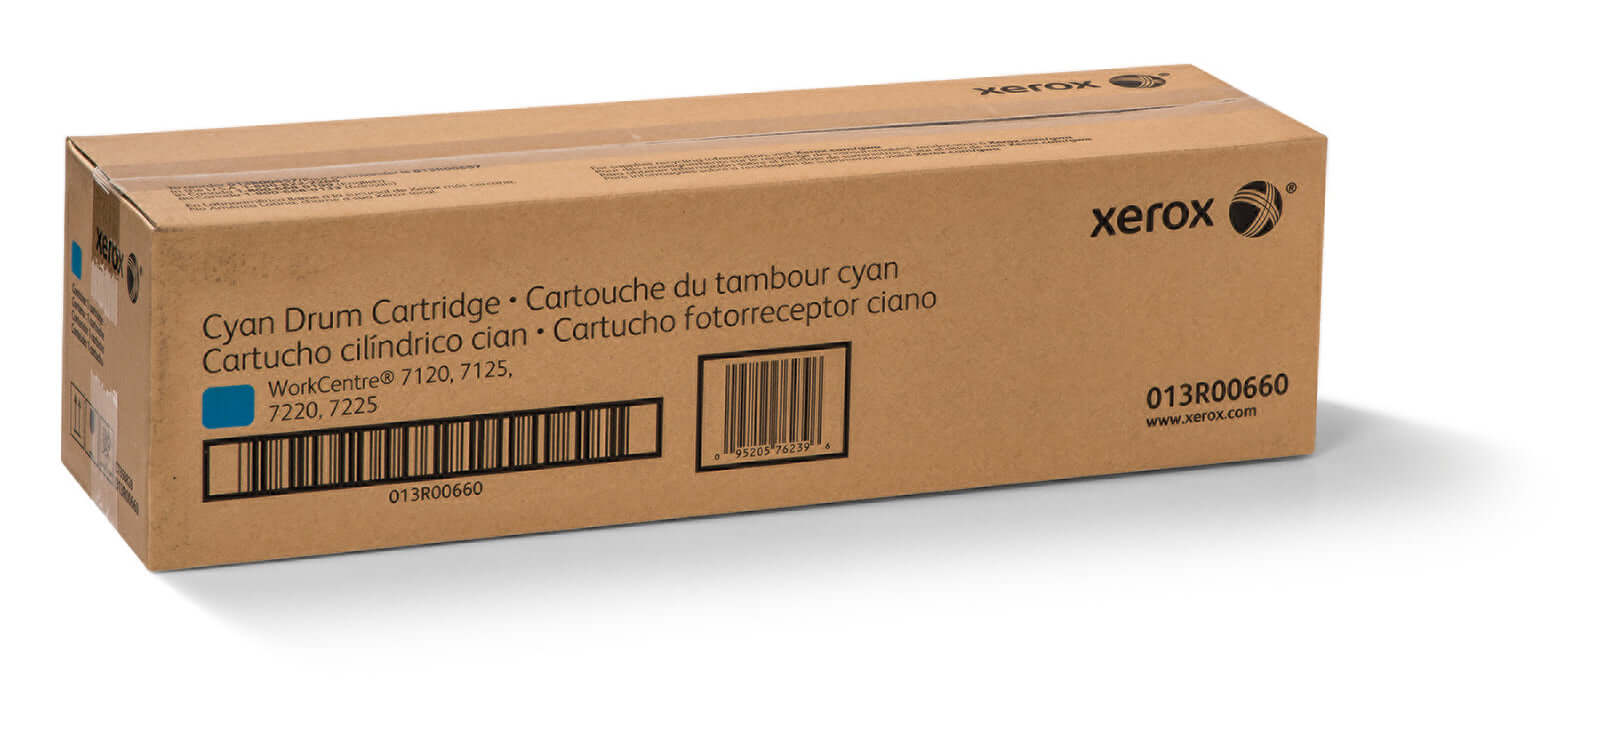 Xerox Cyan Drum Cartridge (51,000) 013R00660 for WorkCentre 7120/7125/7220/7225/7220i/7225i